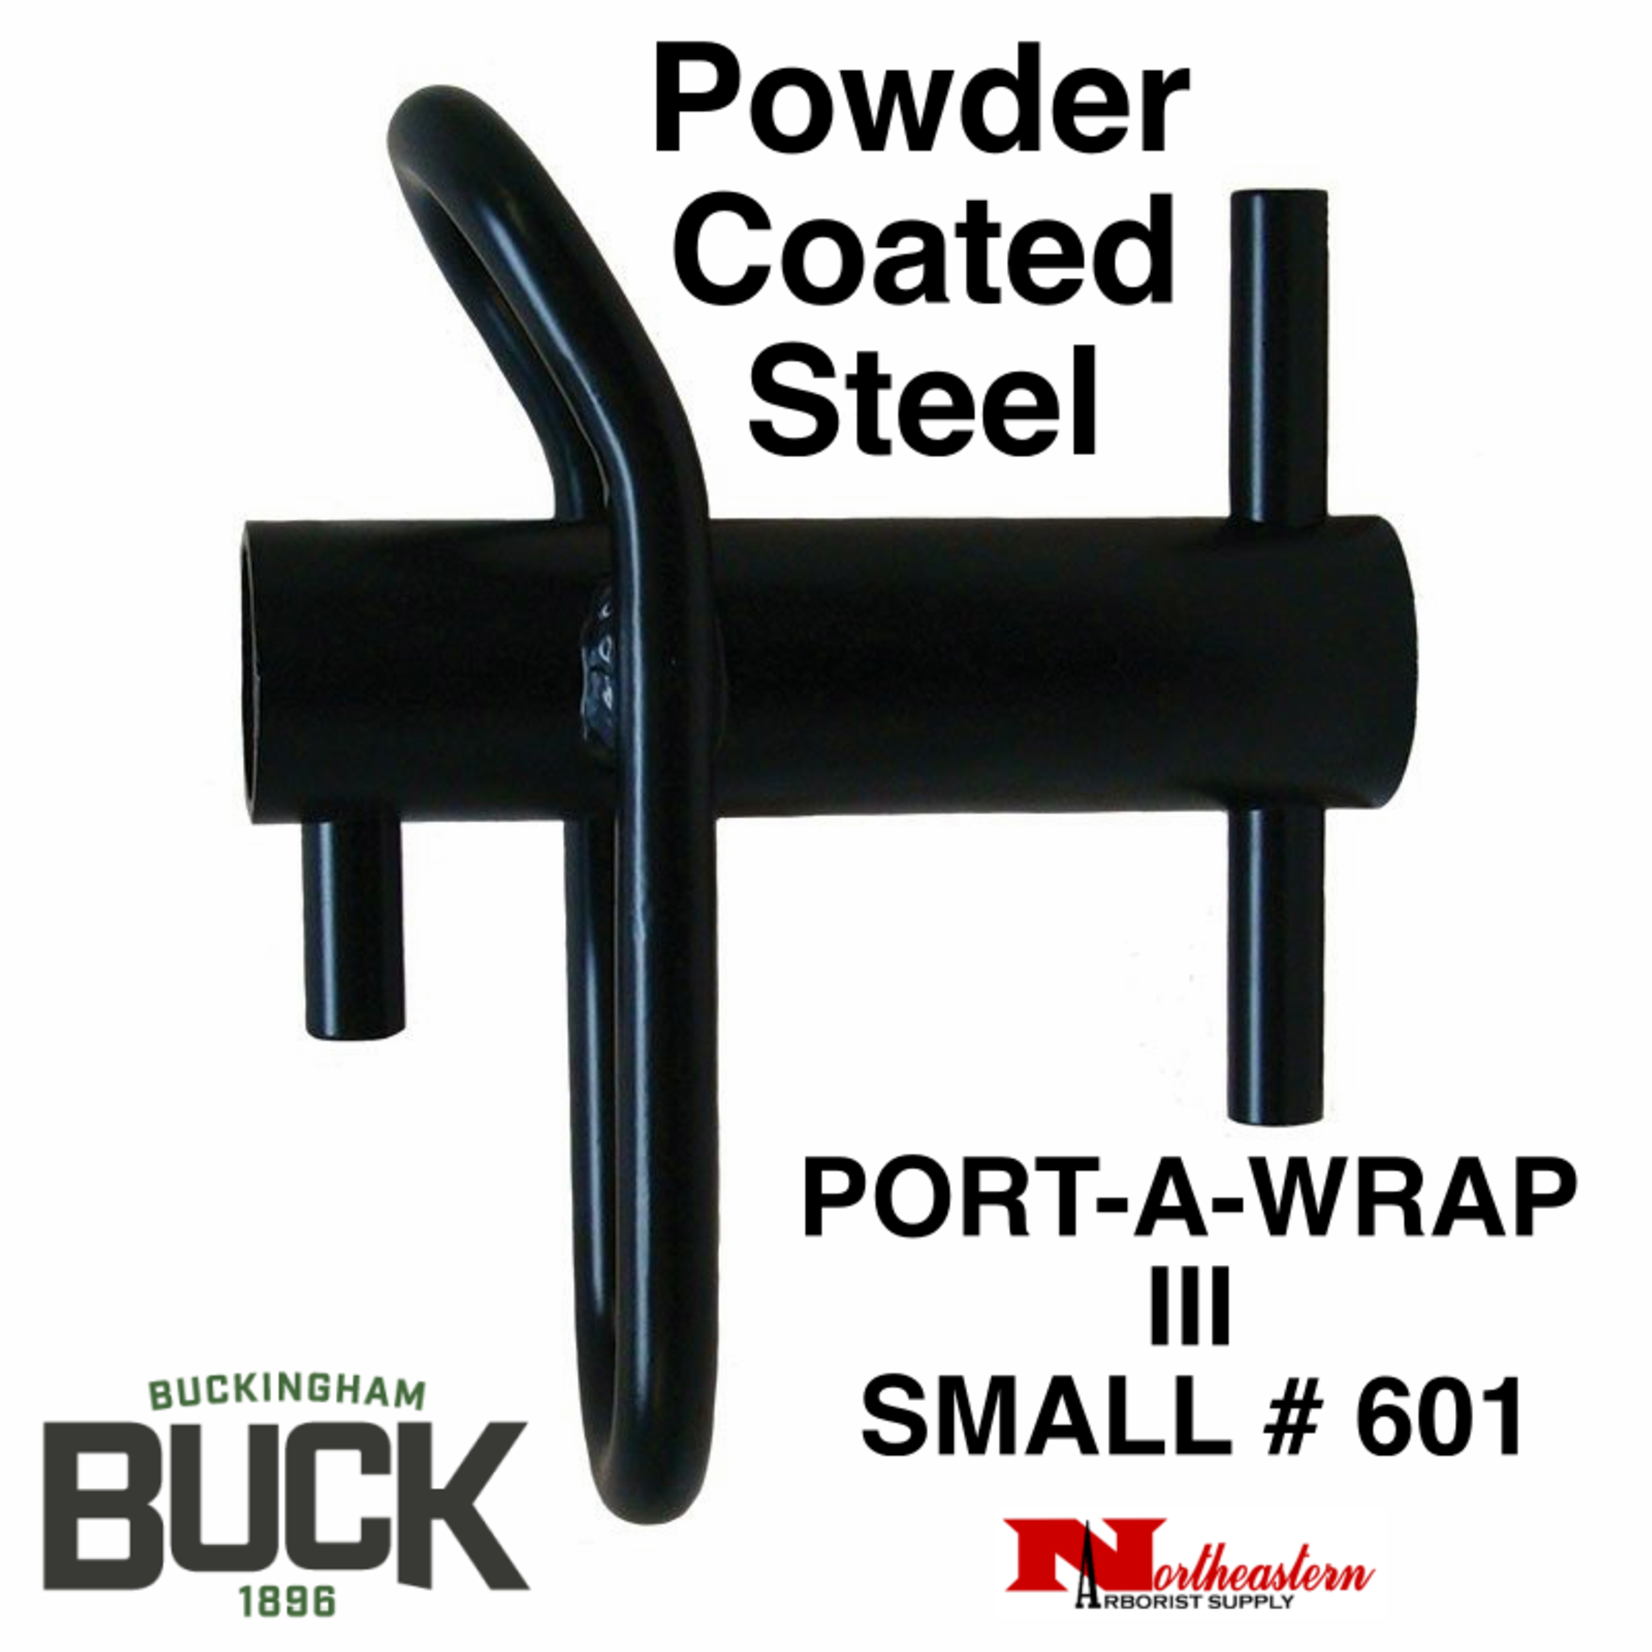 Buckingham Port-A-Wrap III, Powder Coated, Small